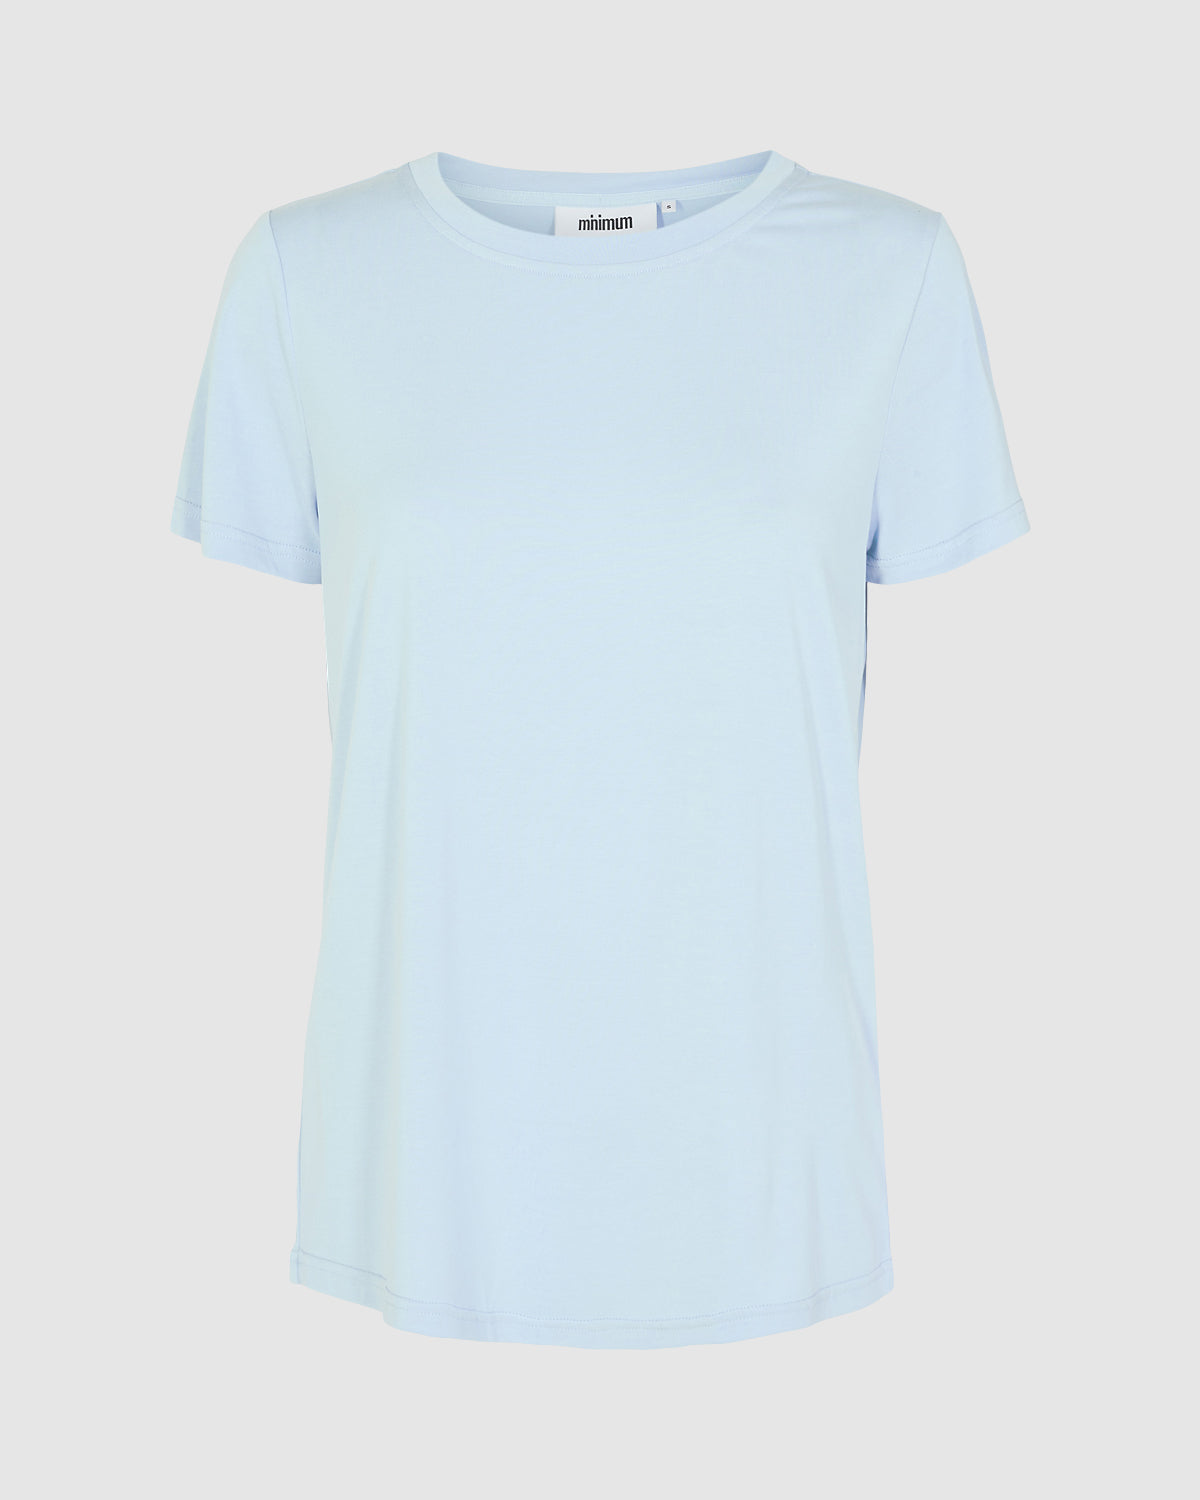 Minimum Rynah T-Shirt Chambray Blue TWOJAYS